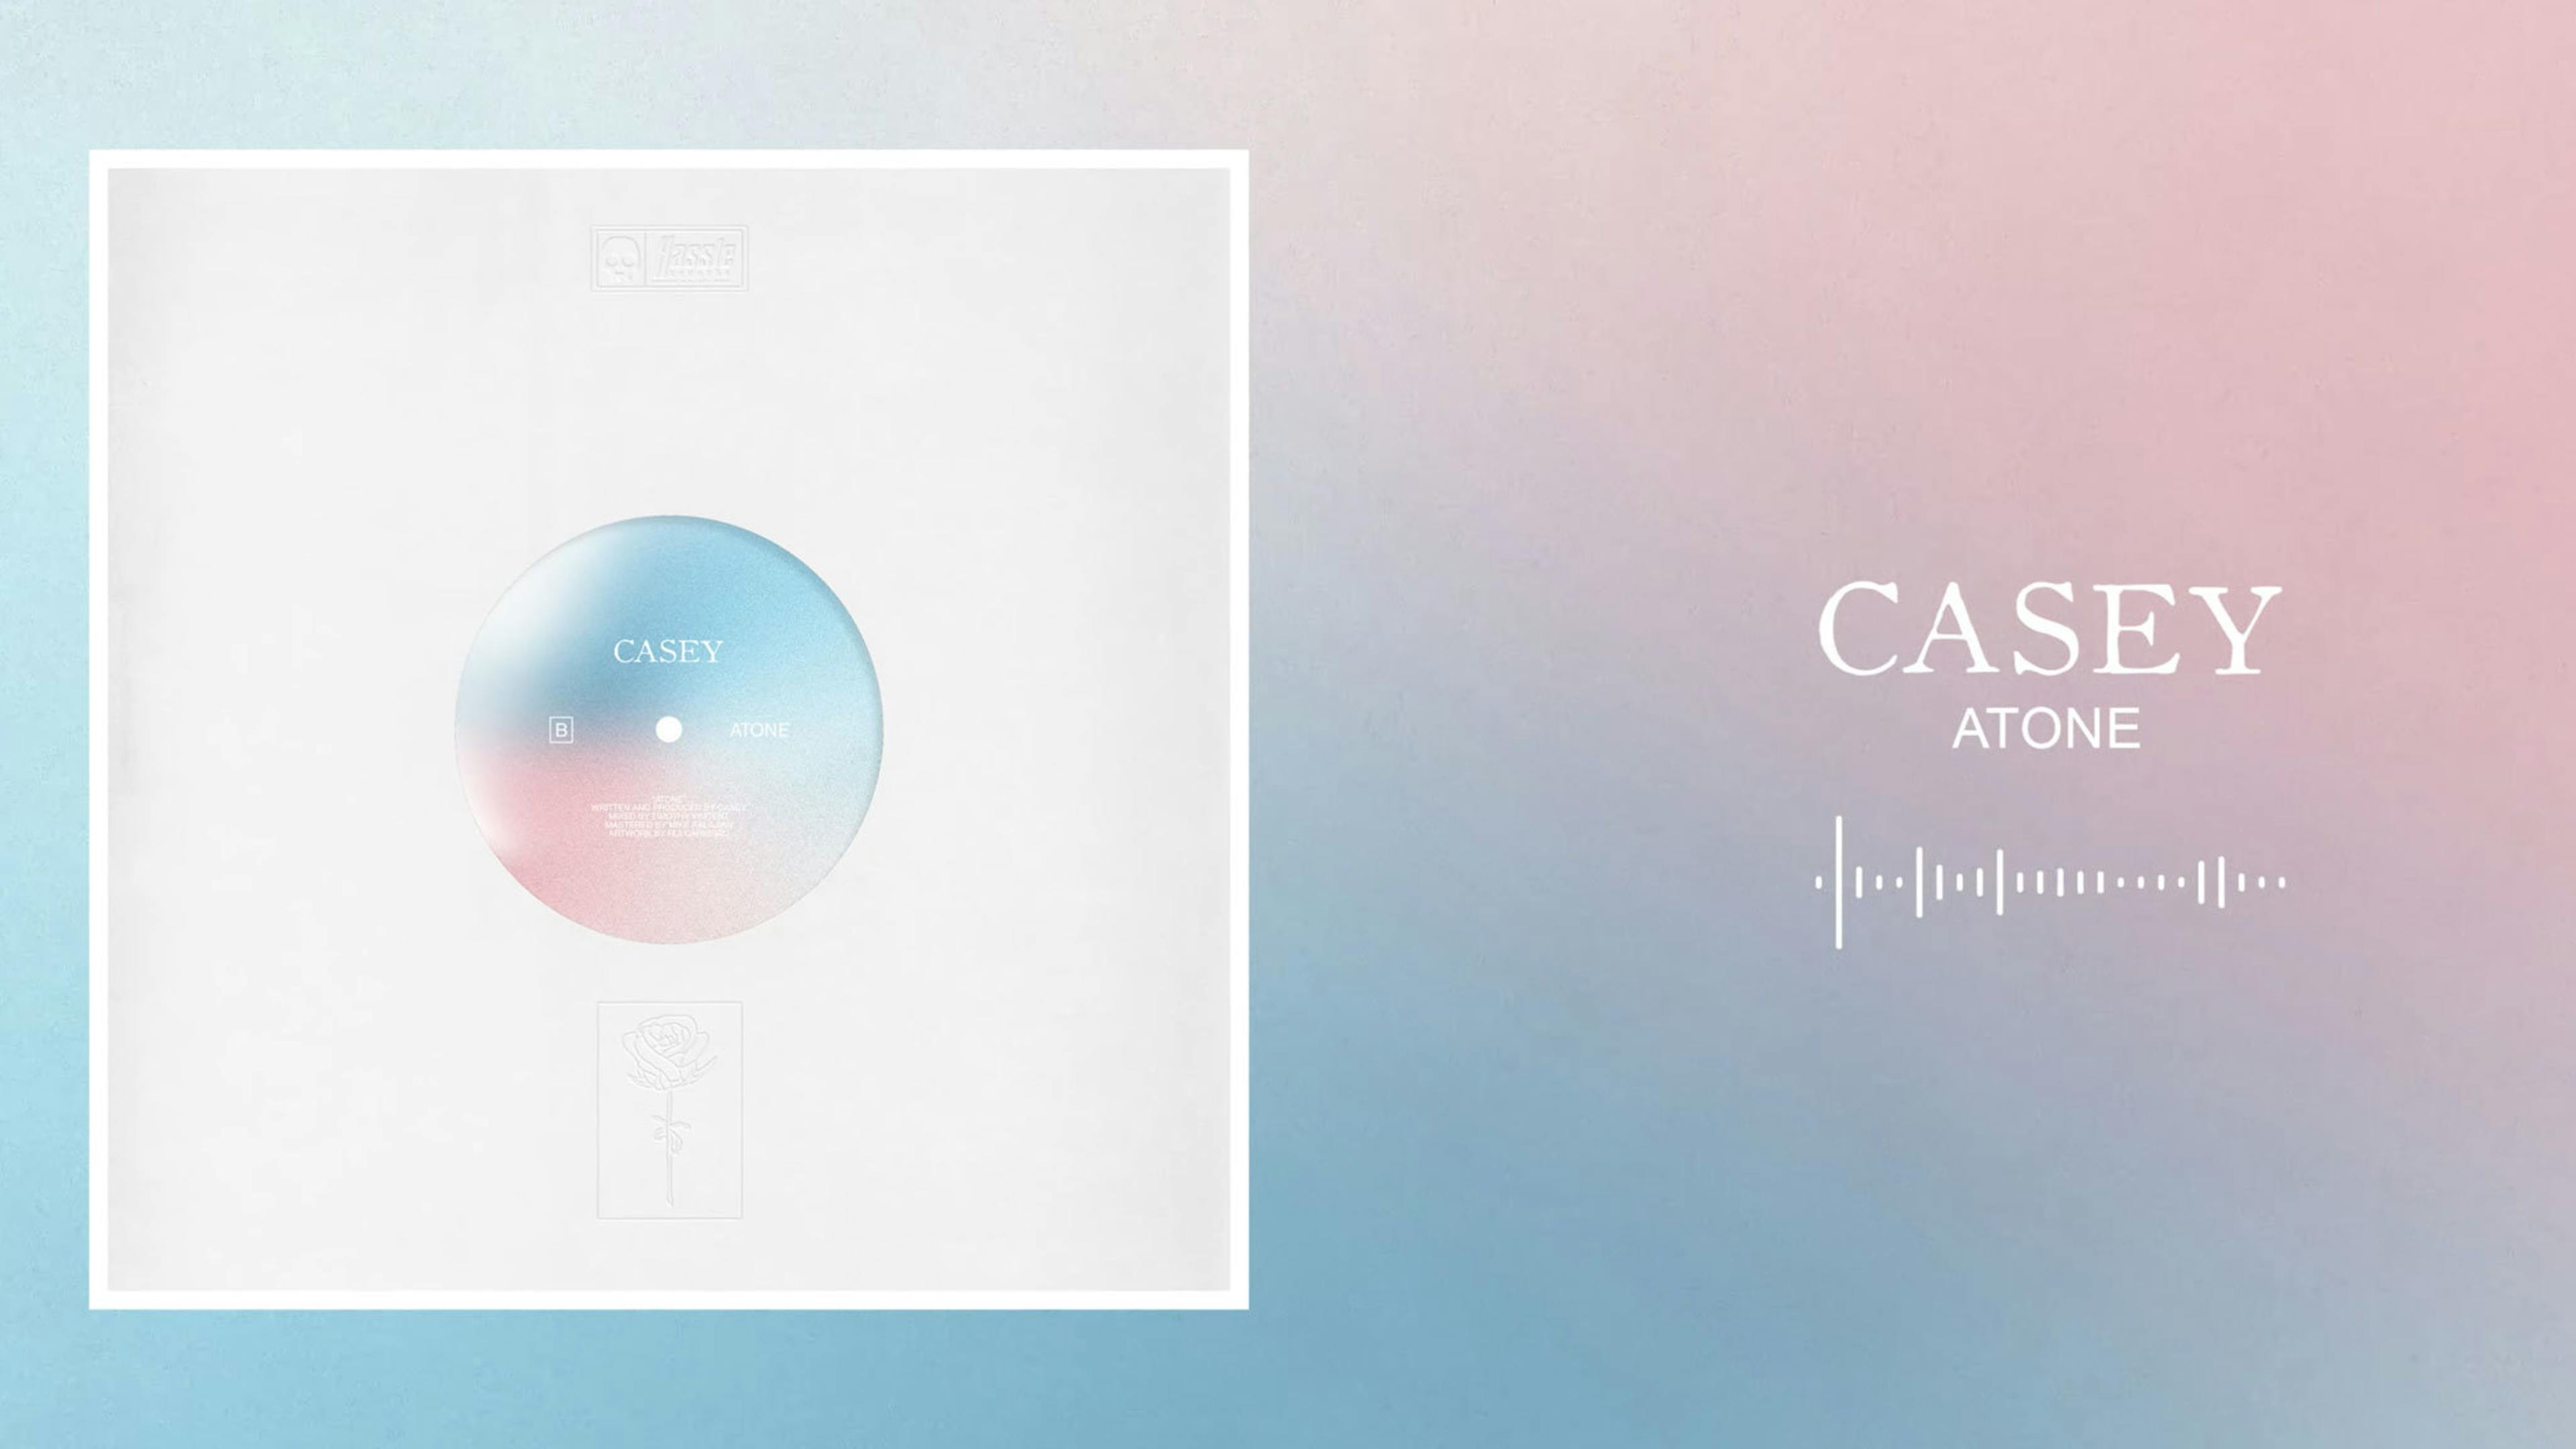 Listen to Casey’s powerful new single, Atone